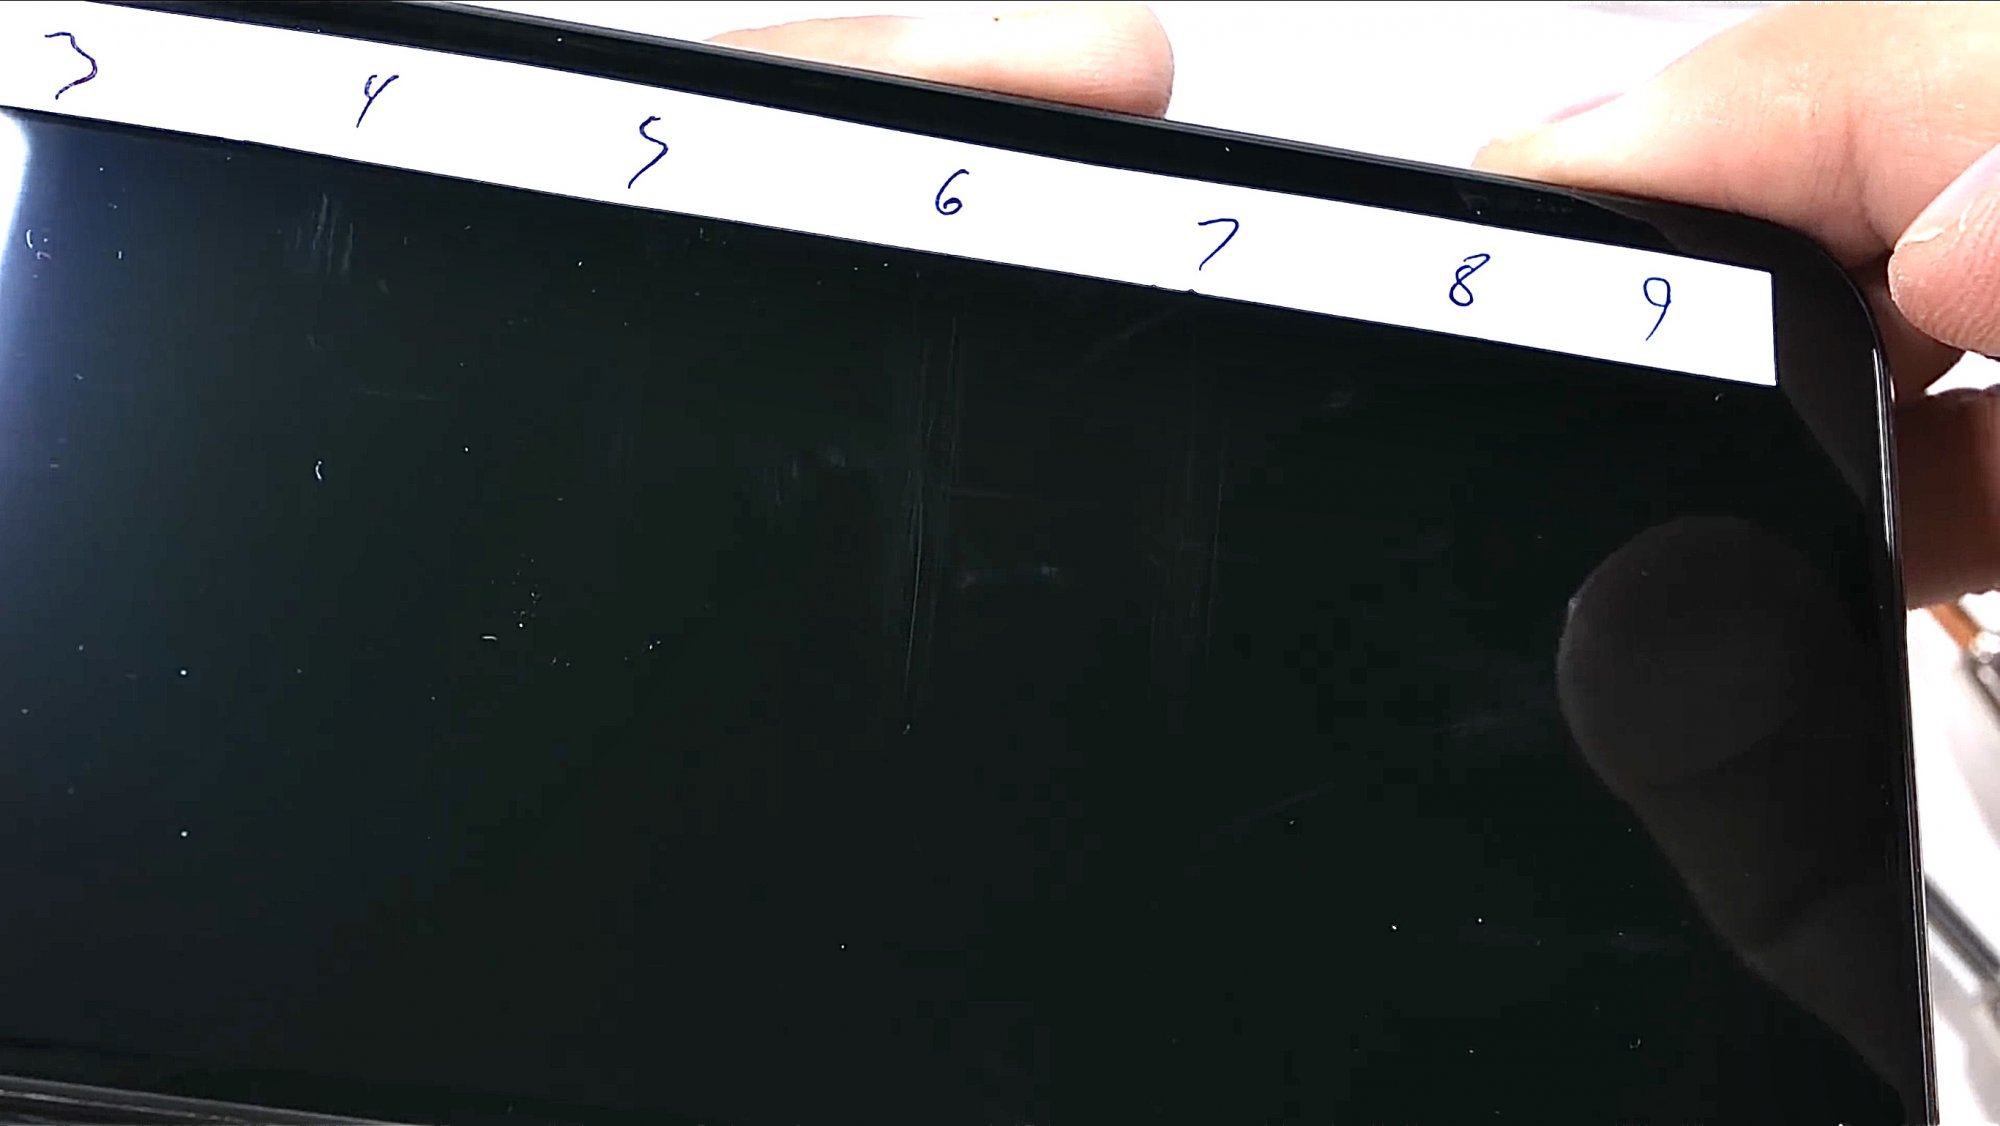 iPhone 11 screen scratches - Apple Community